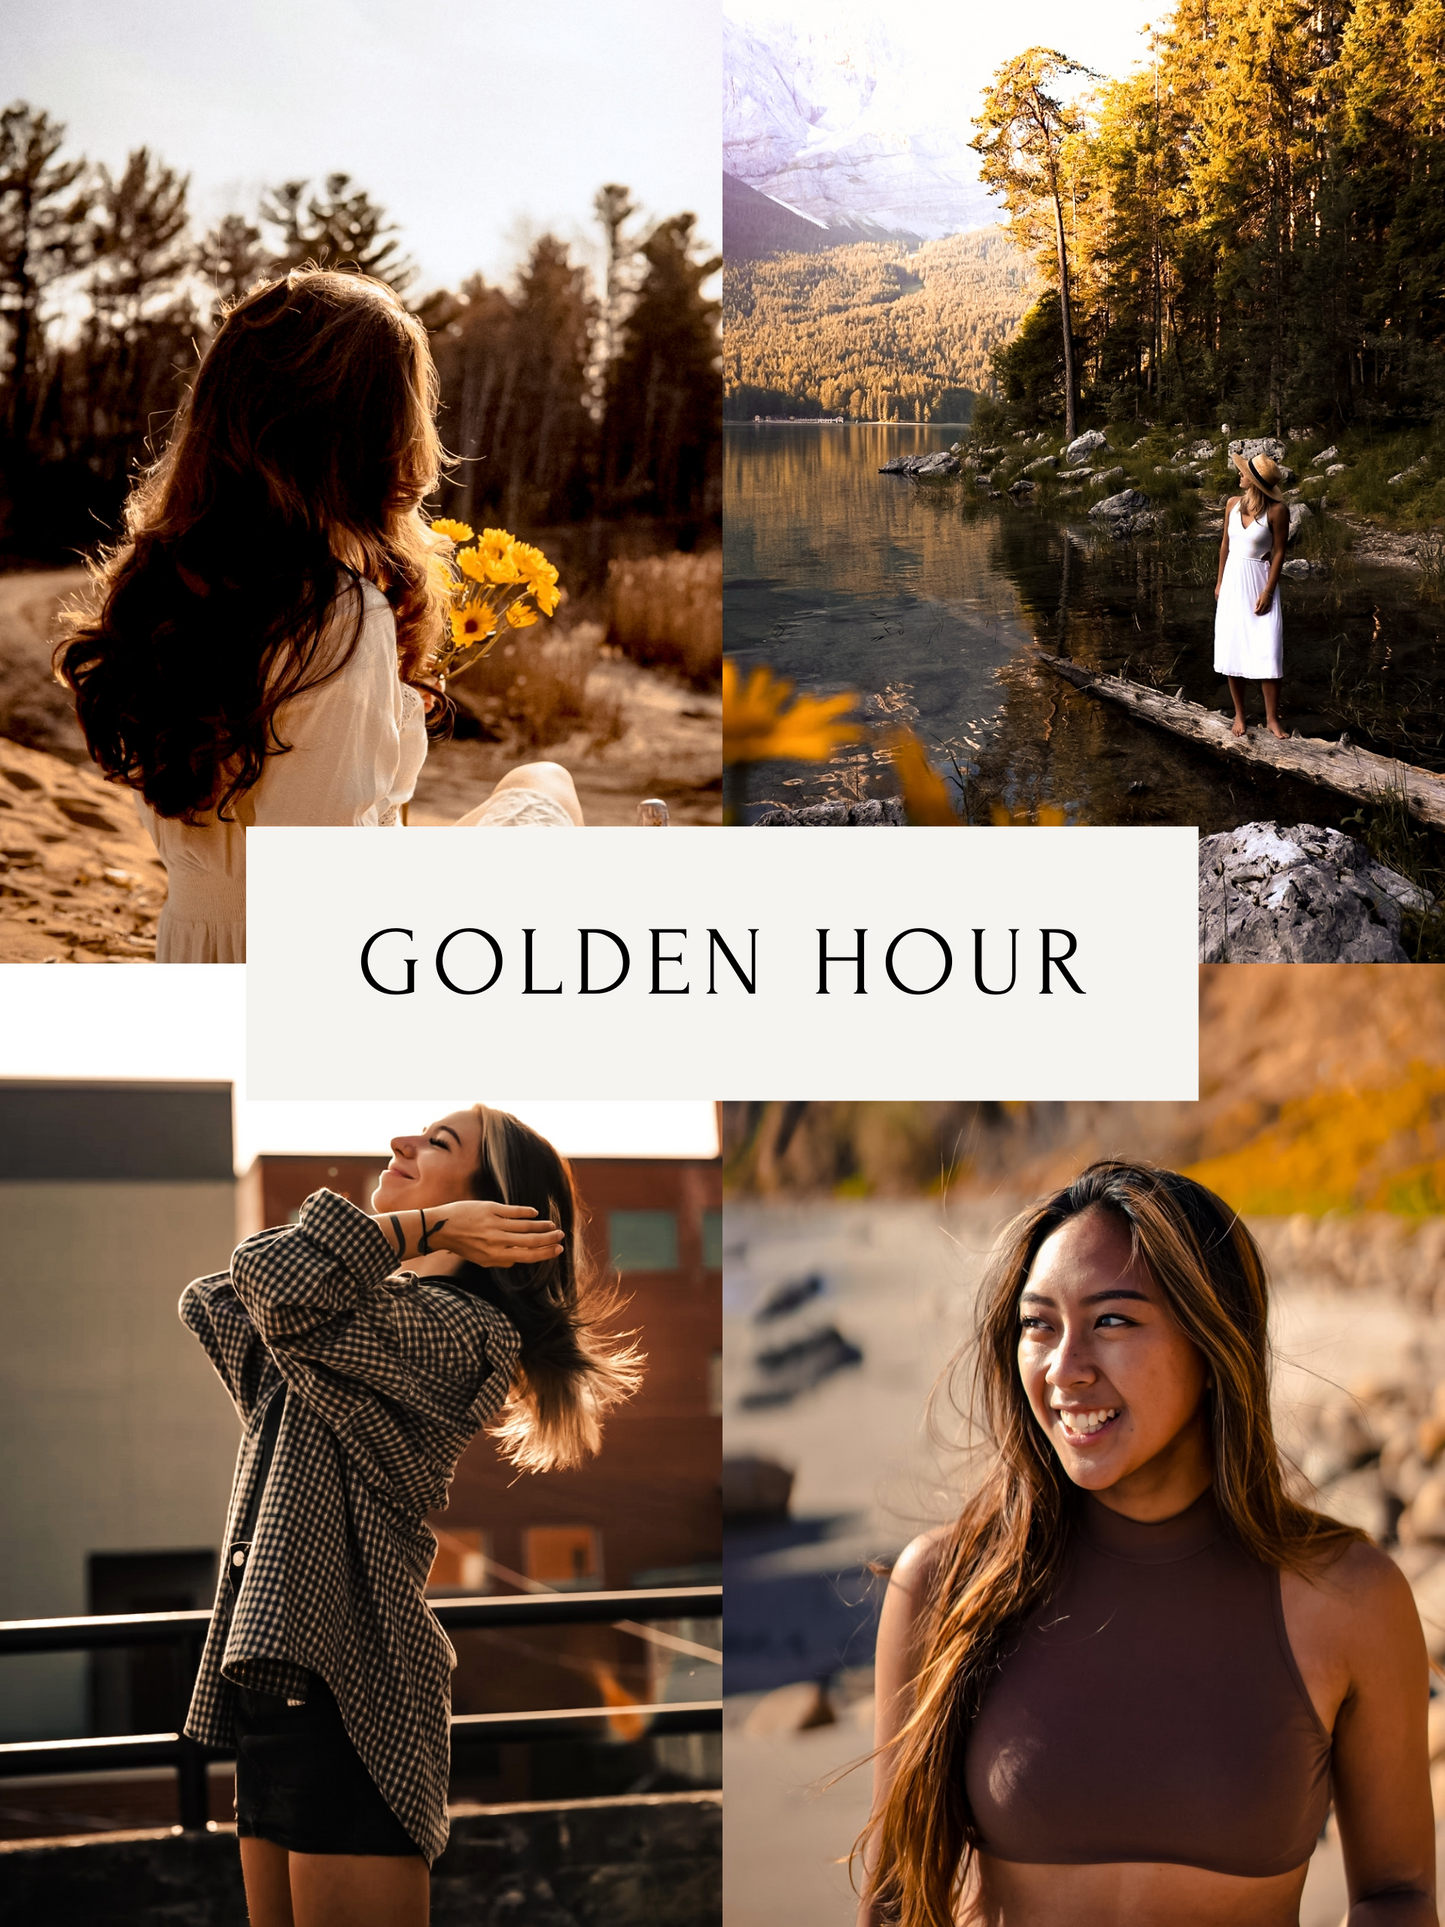 Golden Hour - One Click Filter